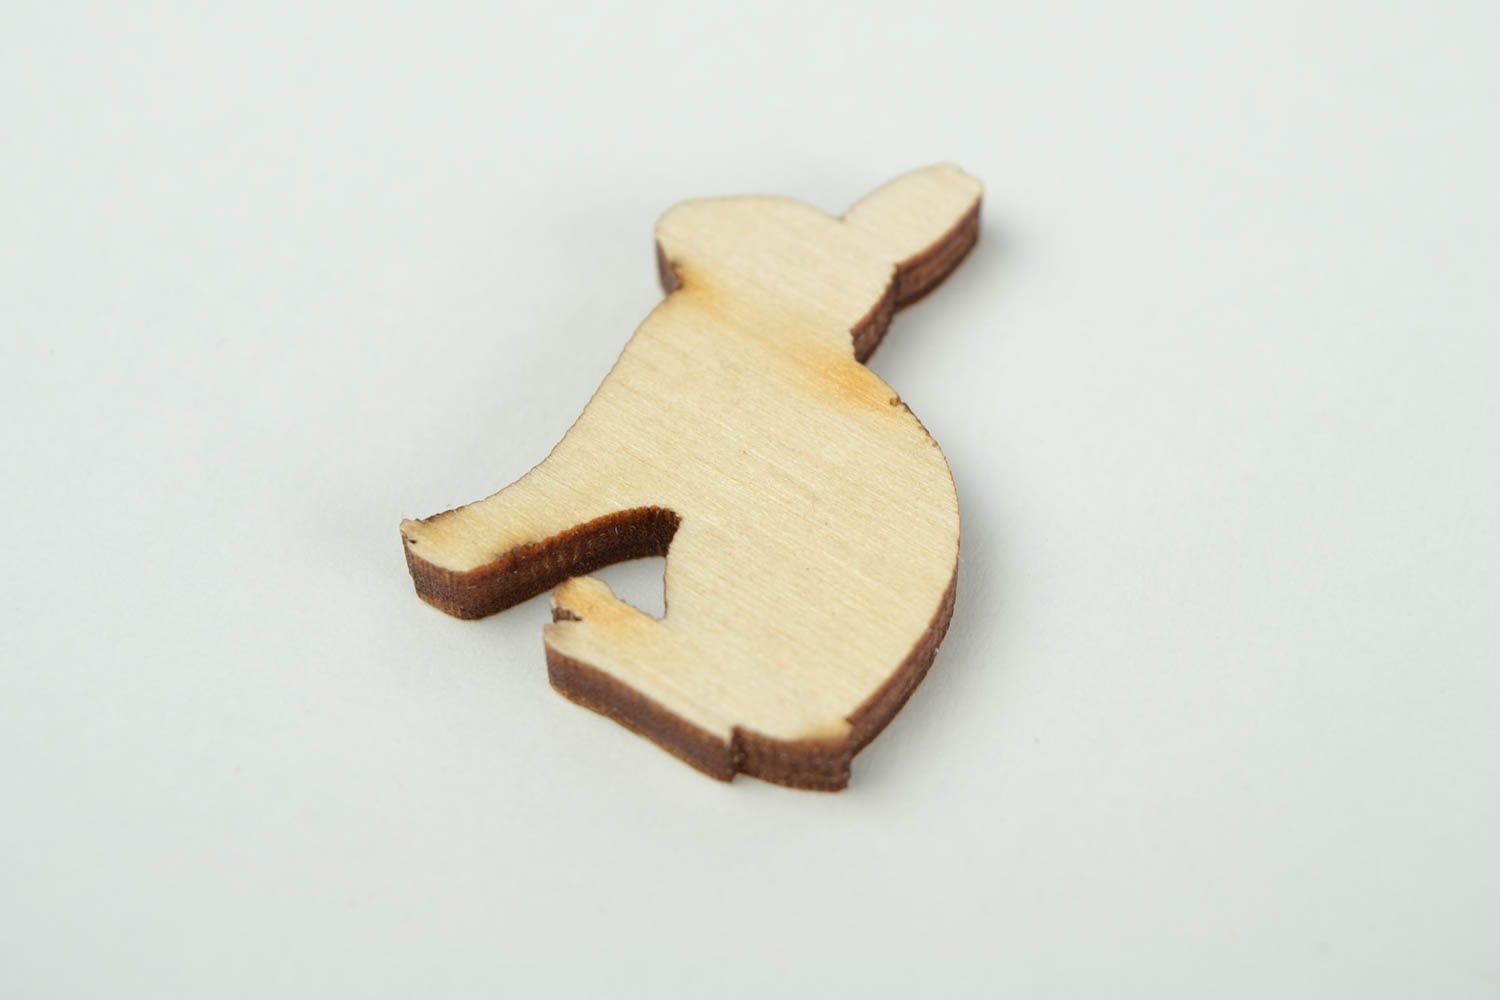 Handmade wooden cute blank unusual goods for creativity art and craft ideas photo 5